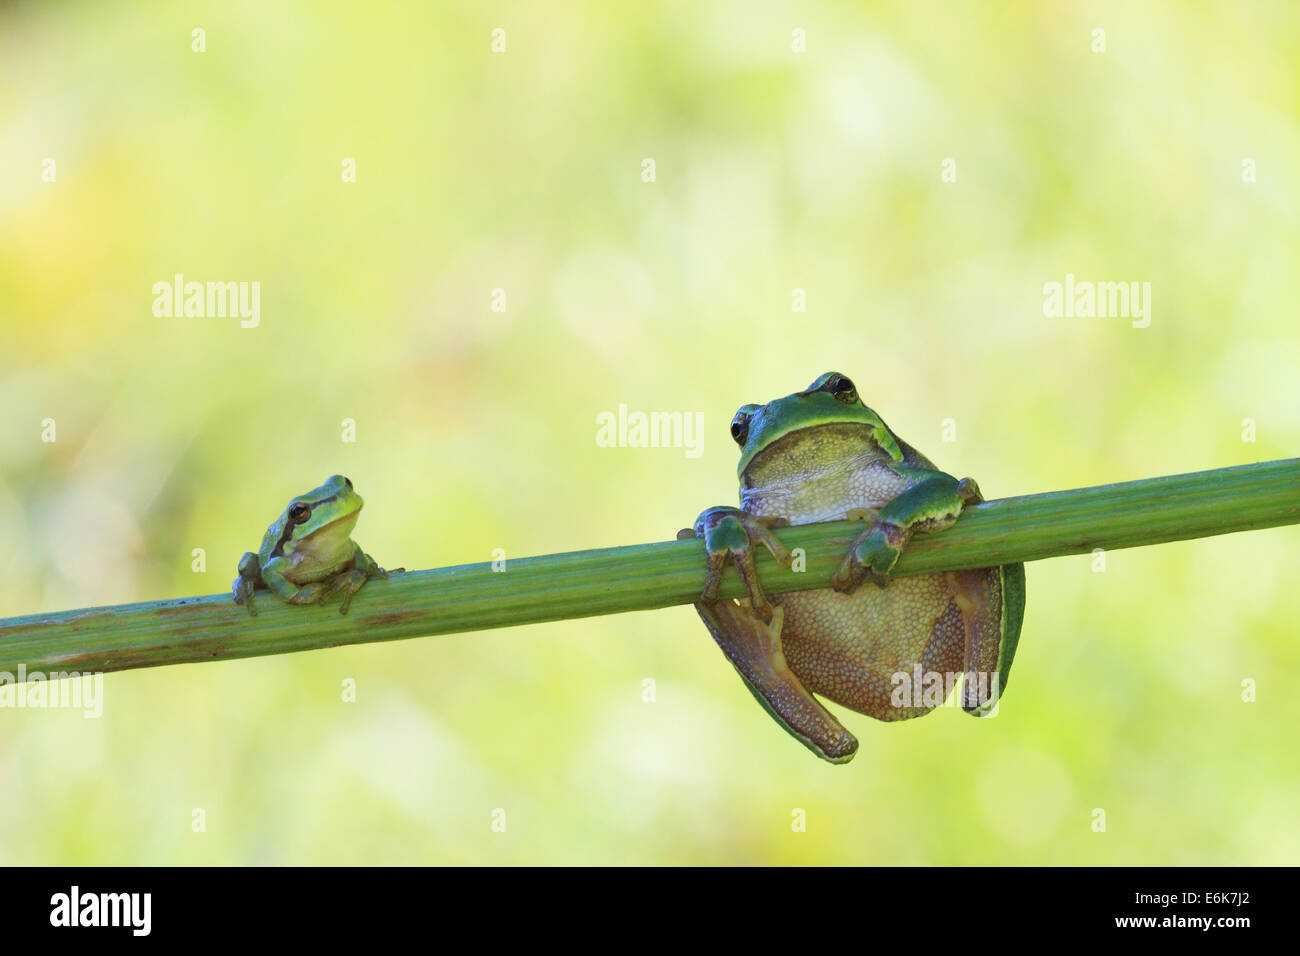 Two European Treefrogs (Hyla arborea) perched on a blade of grass, Tyrol, Austria Stock Photo